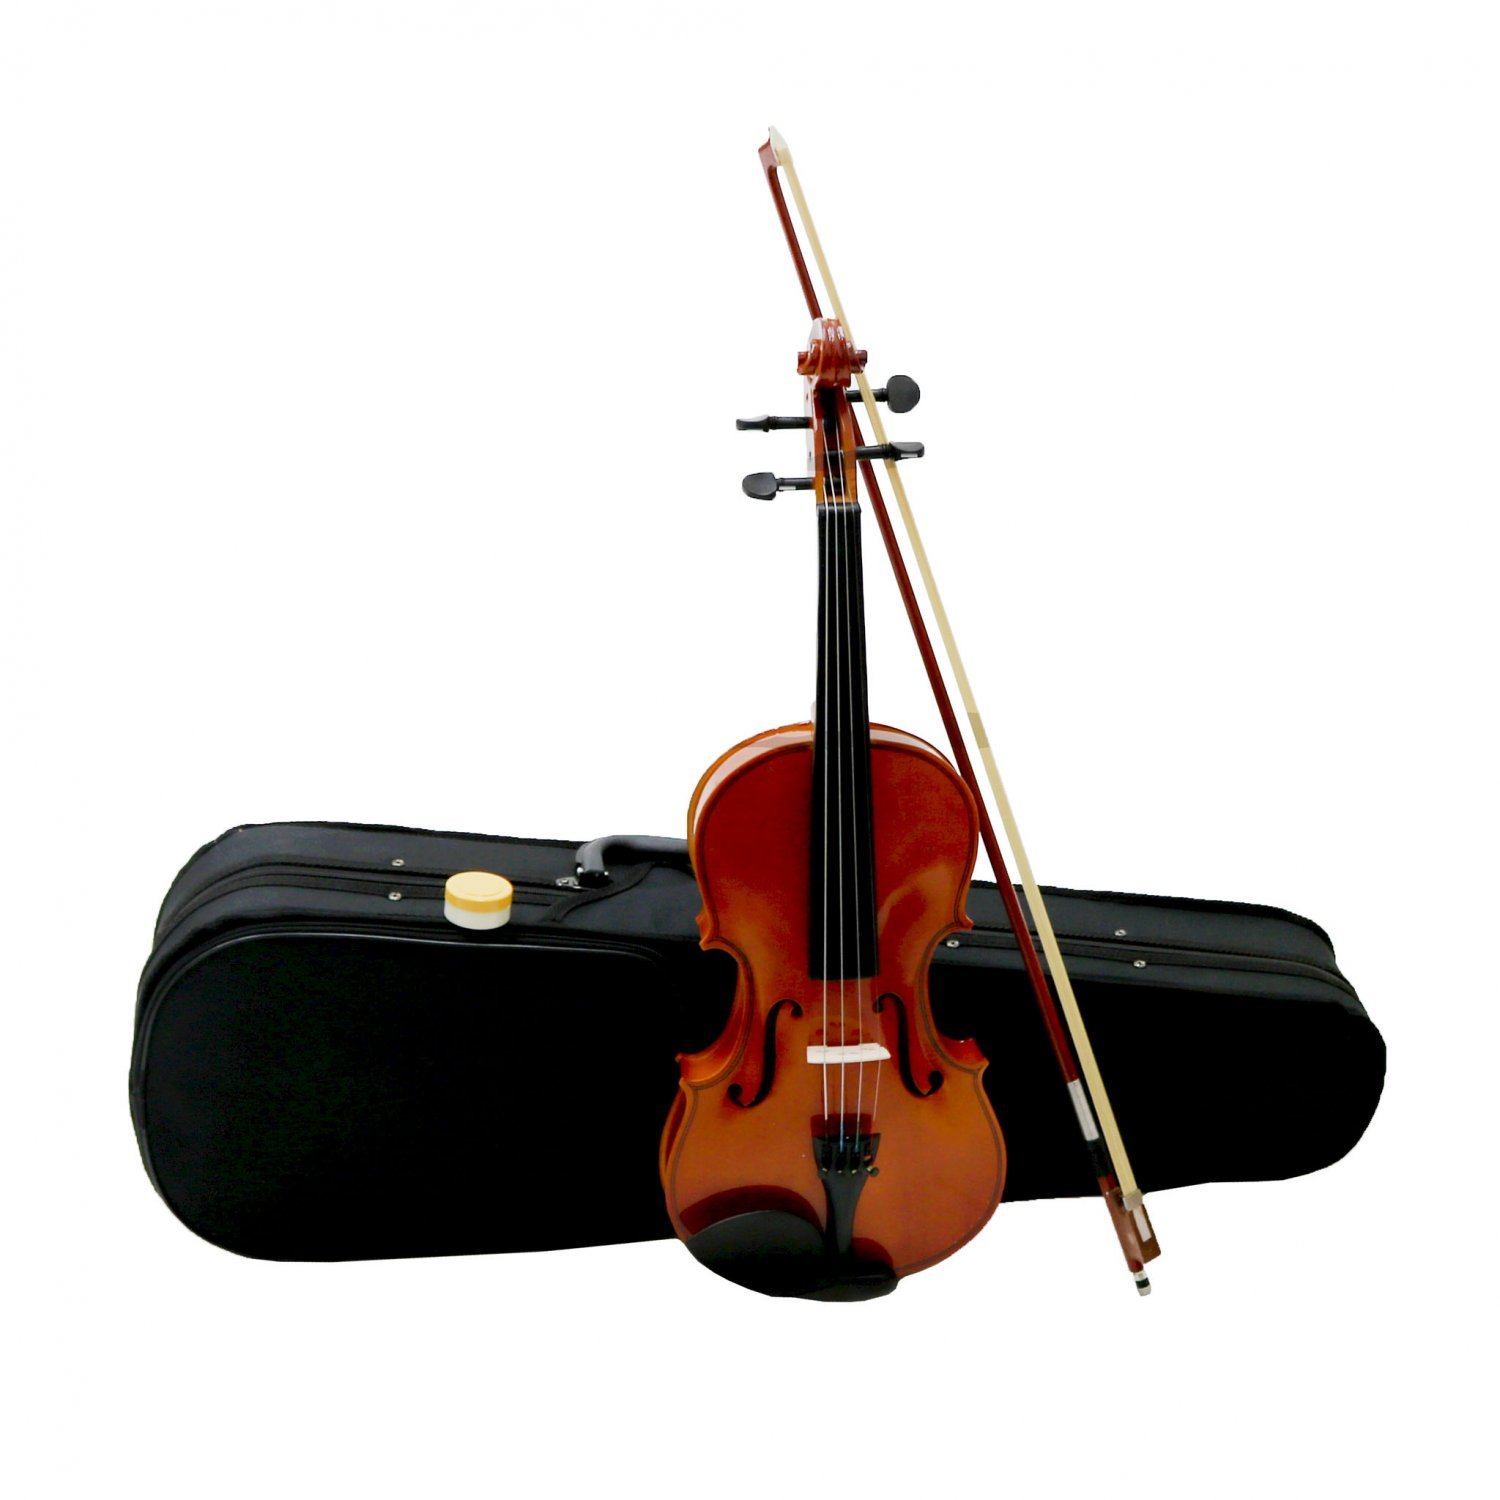 Rosin 2 pack Big size Rosin Natural Rosin for Violin Cello Viola Bows Red 